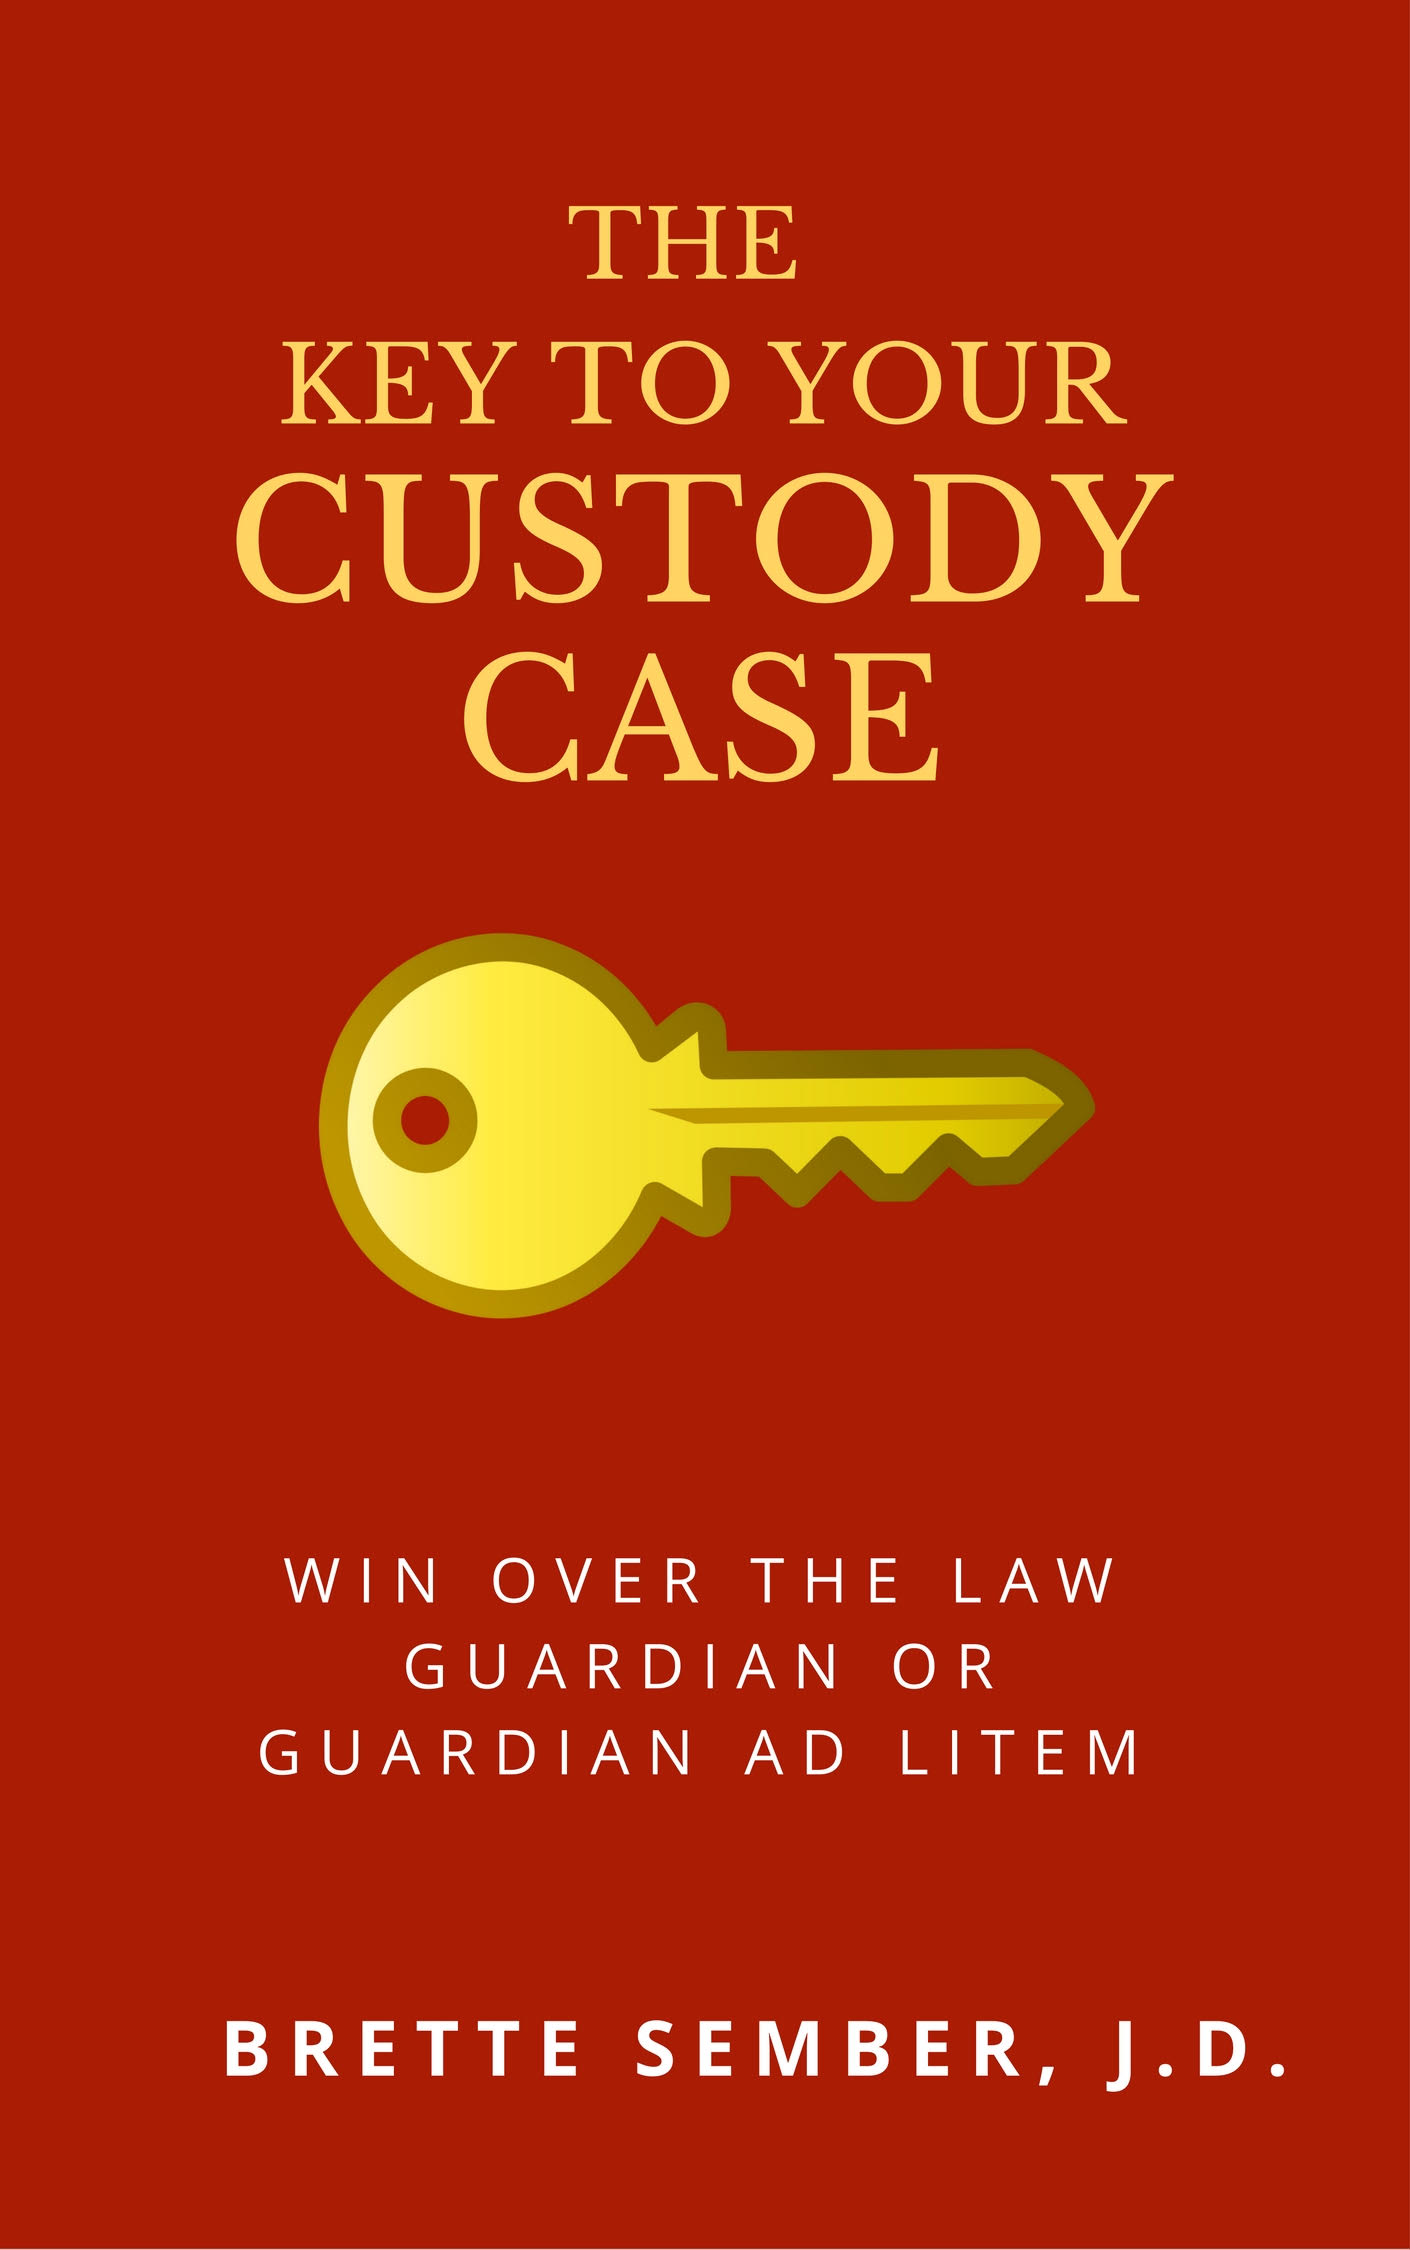 The Key to Your Custody Case